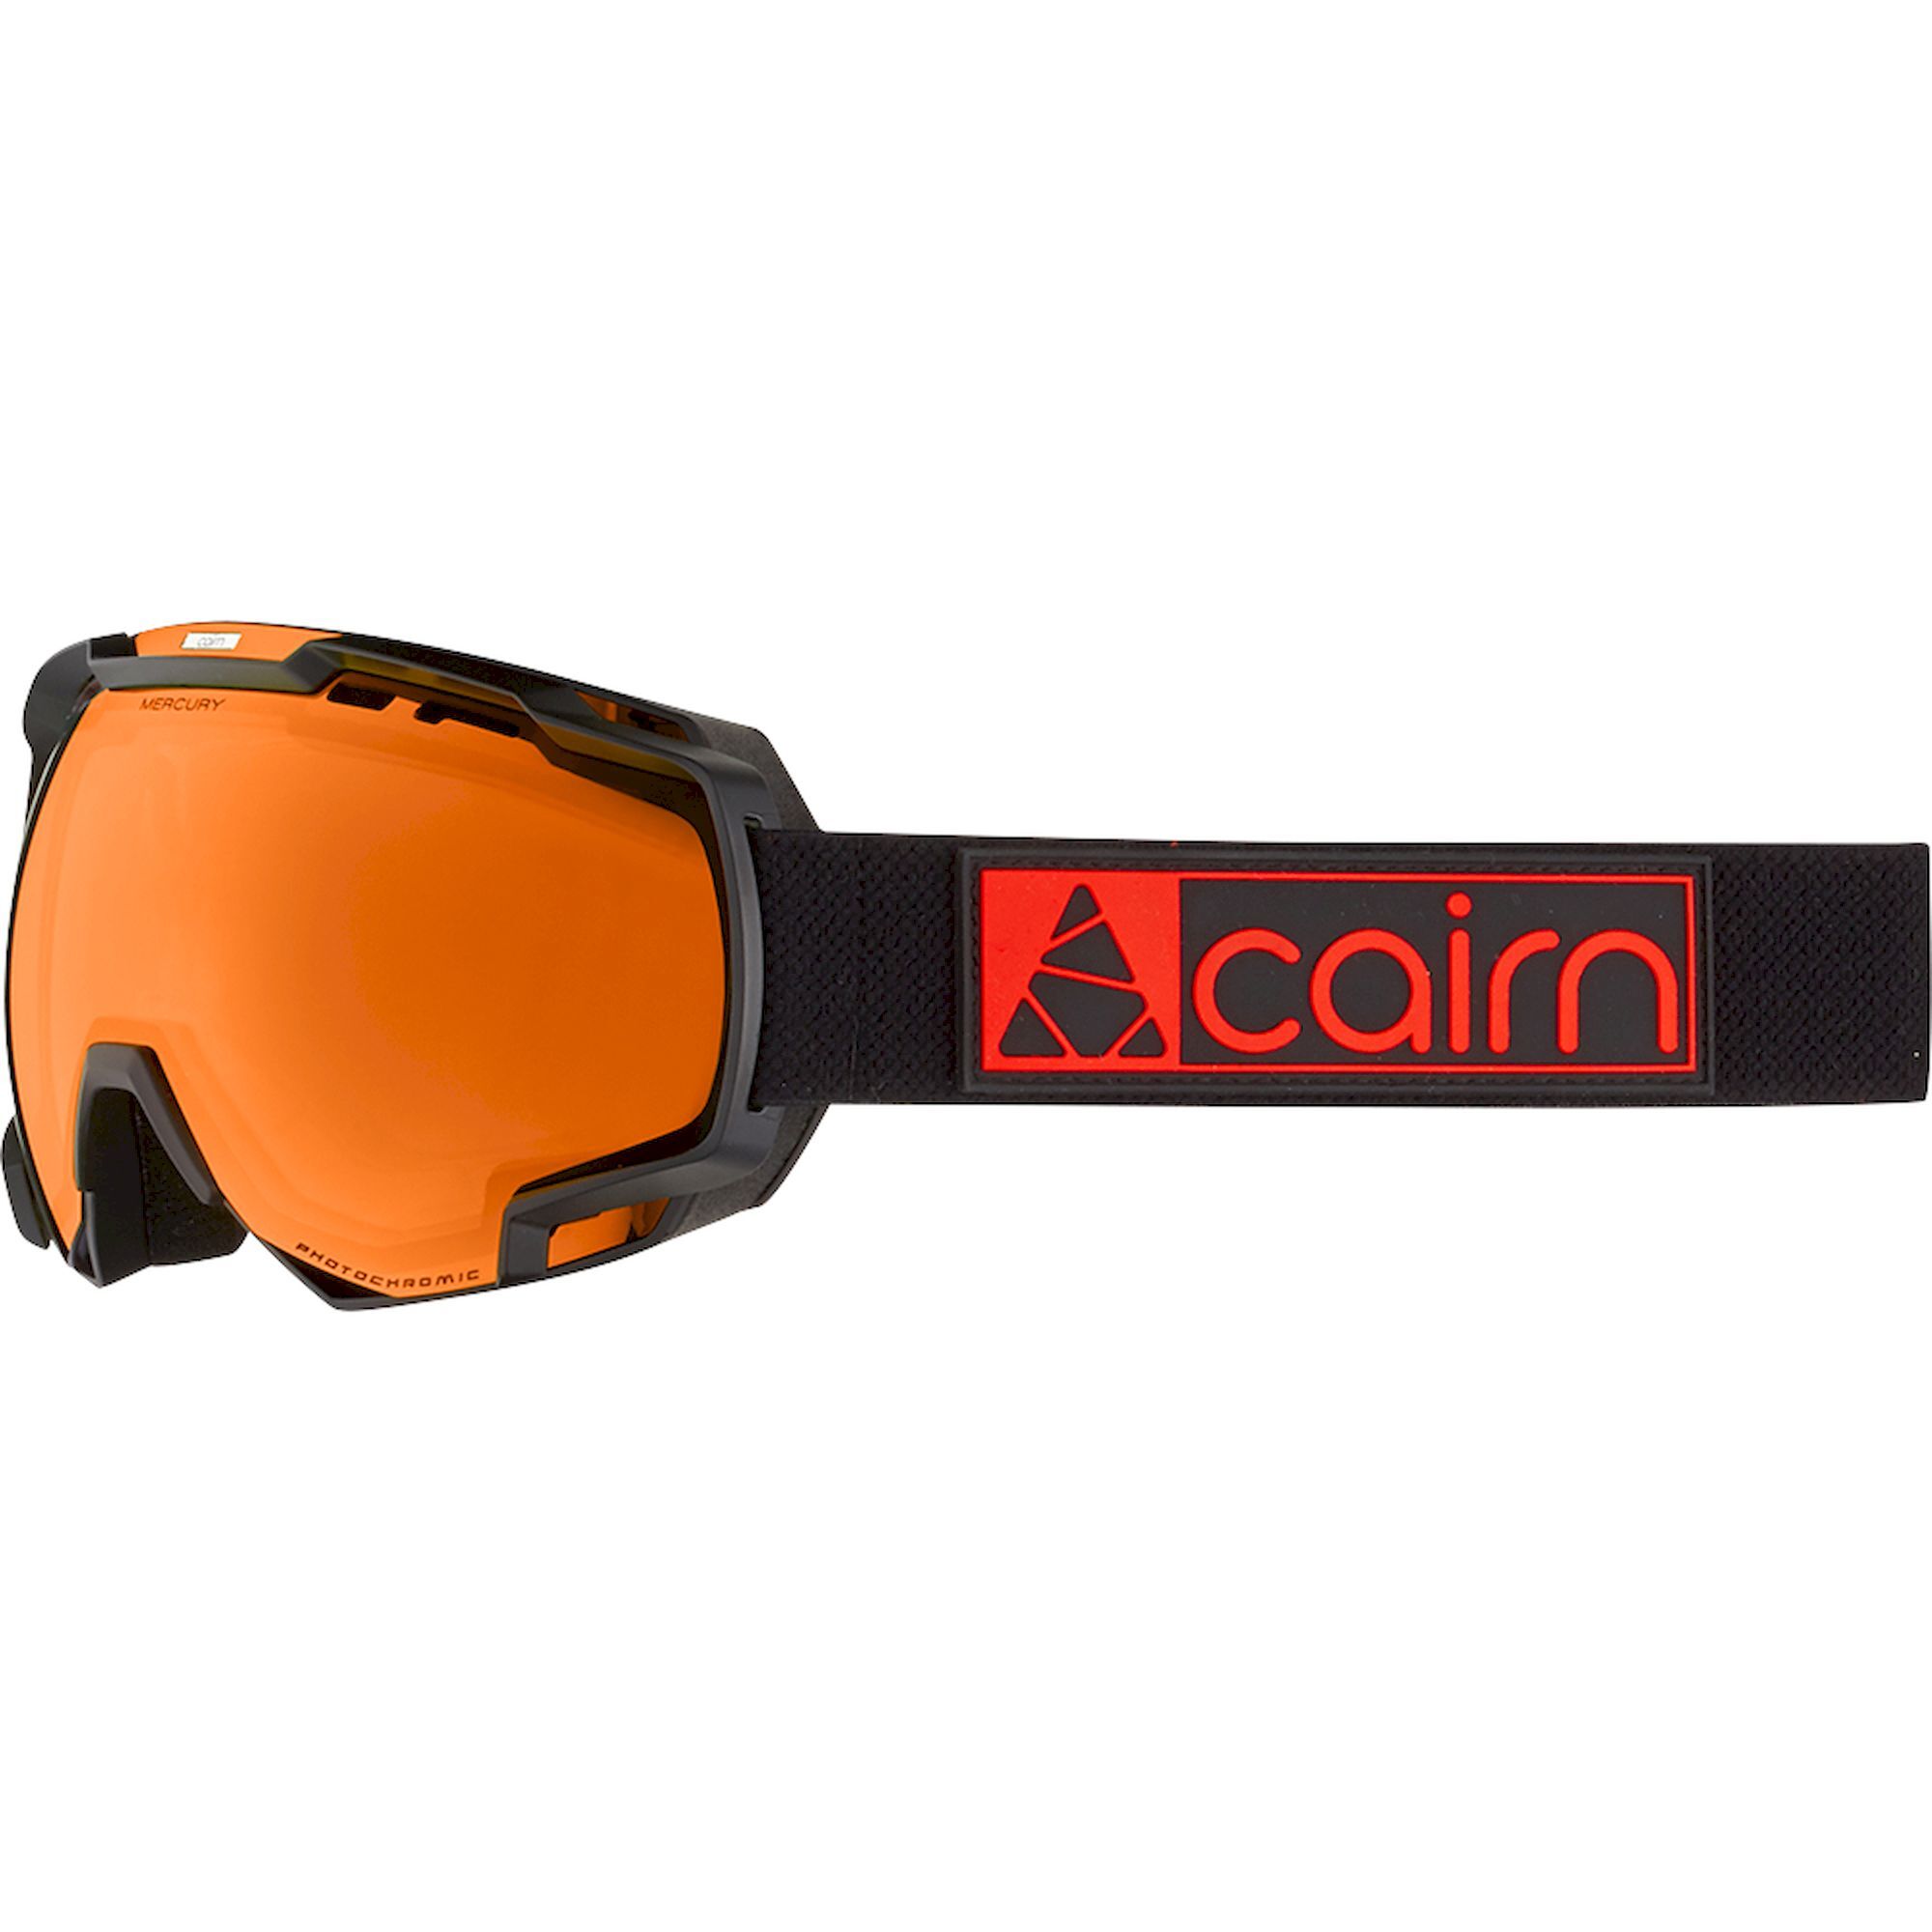 Cairn Mercury Pro - Skidglasögon